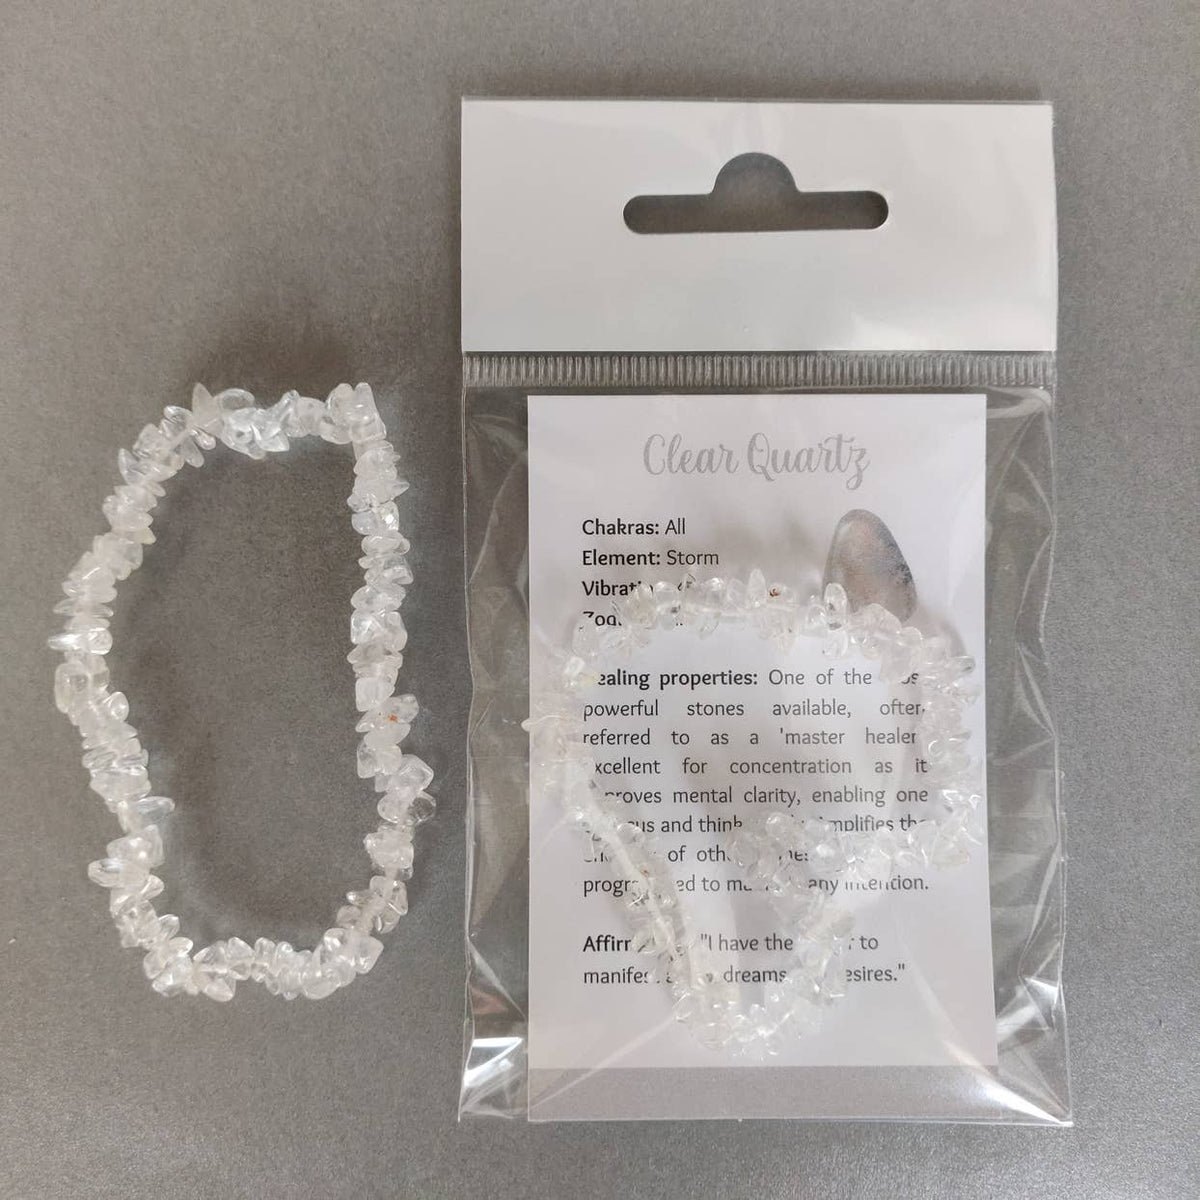 Chip Gemstone / Crystal Stretch Bracelet with FREE Info Card: Red Carnelian